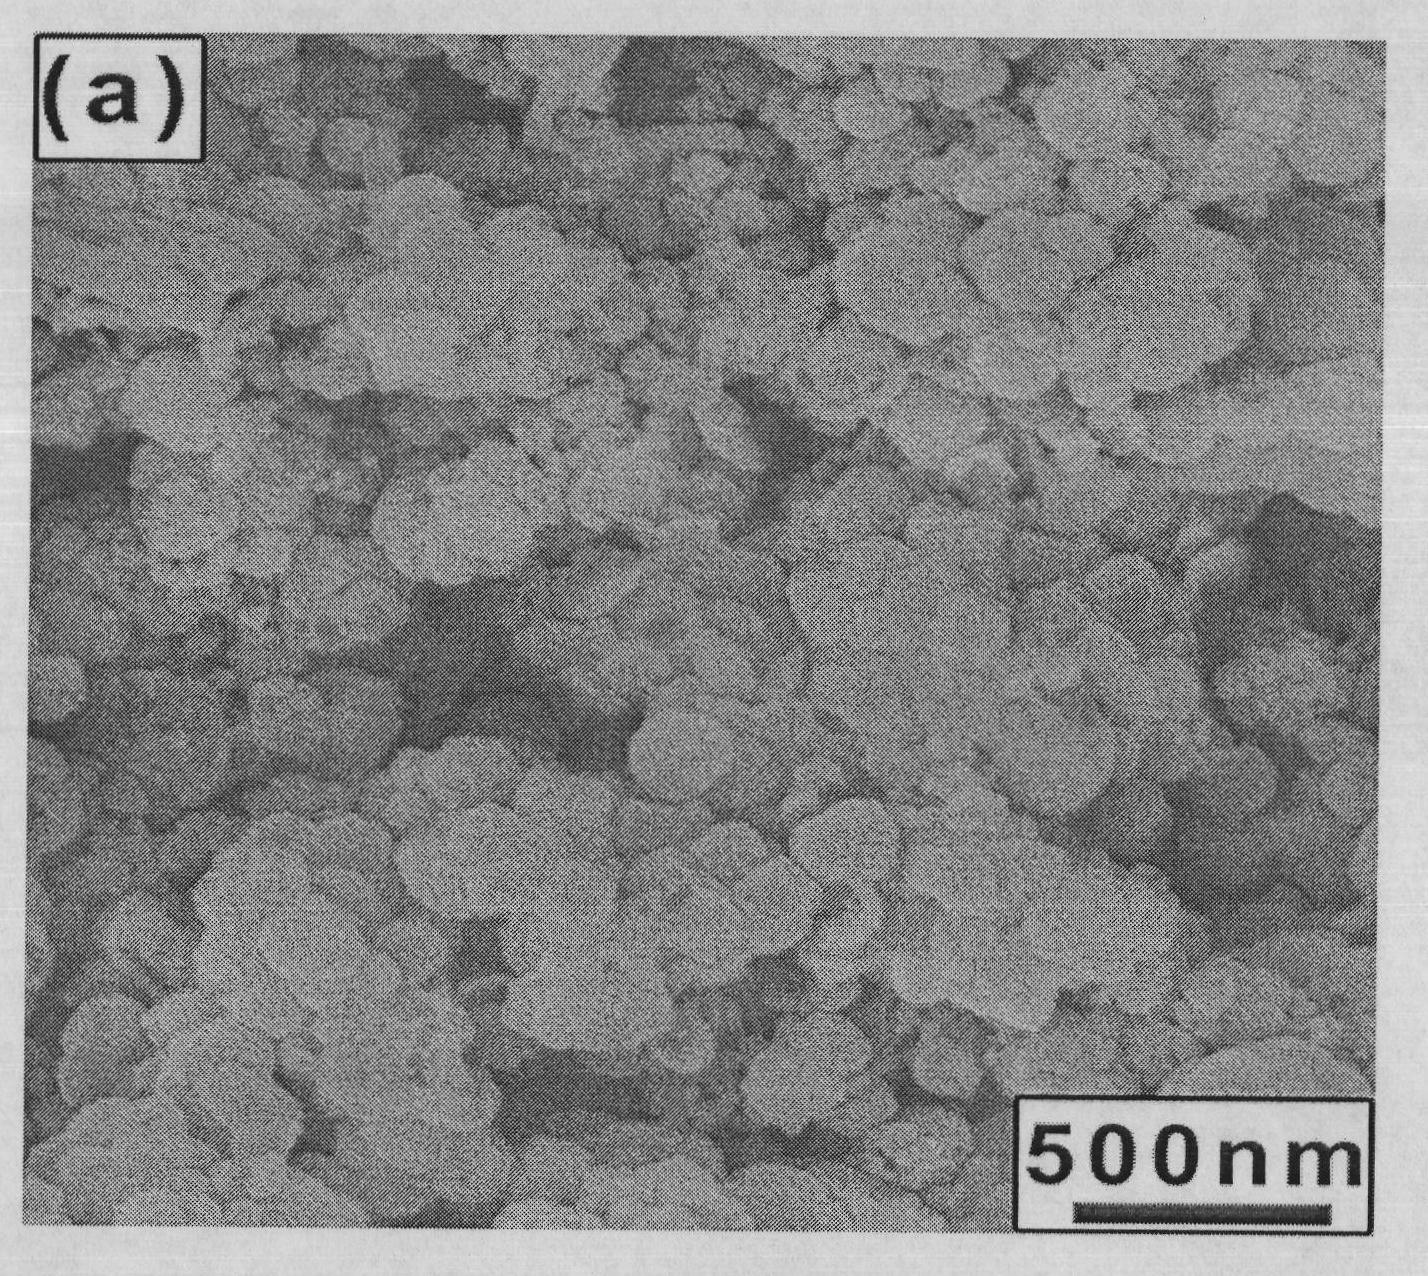 Method for preparing nano barium-strontium titanate powder by adopting hydrothermal method